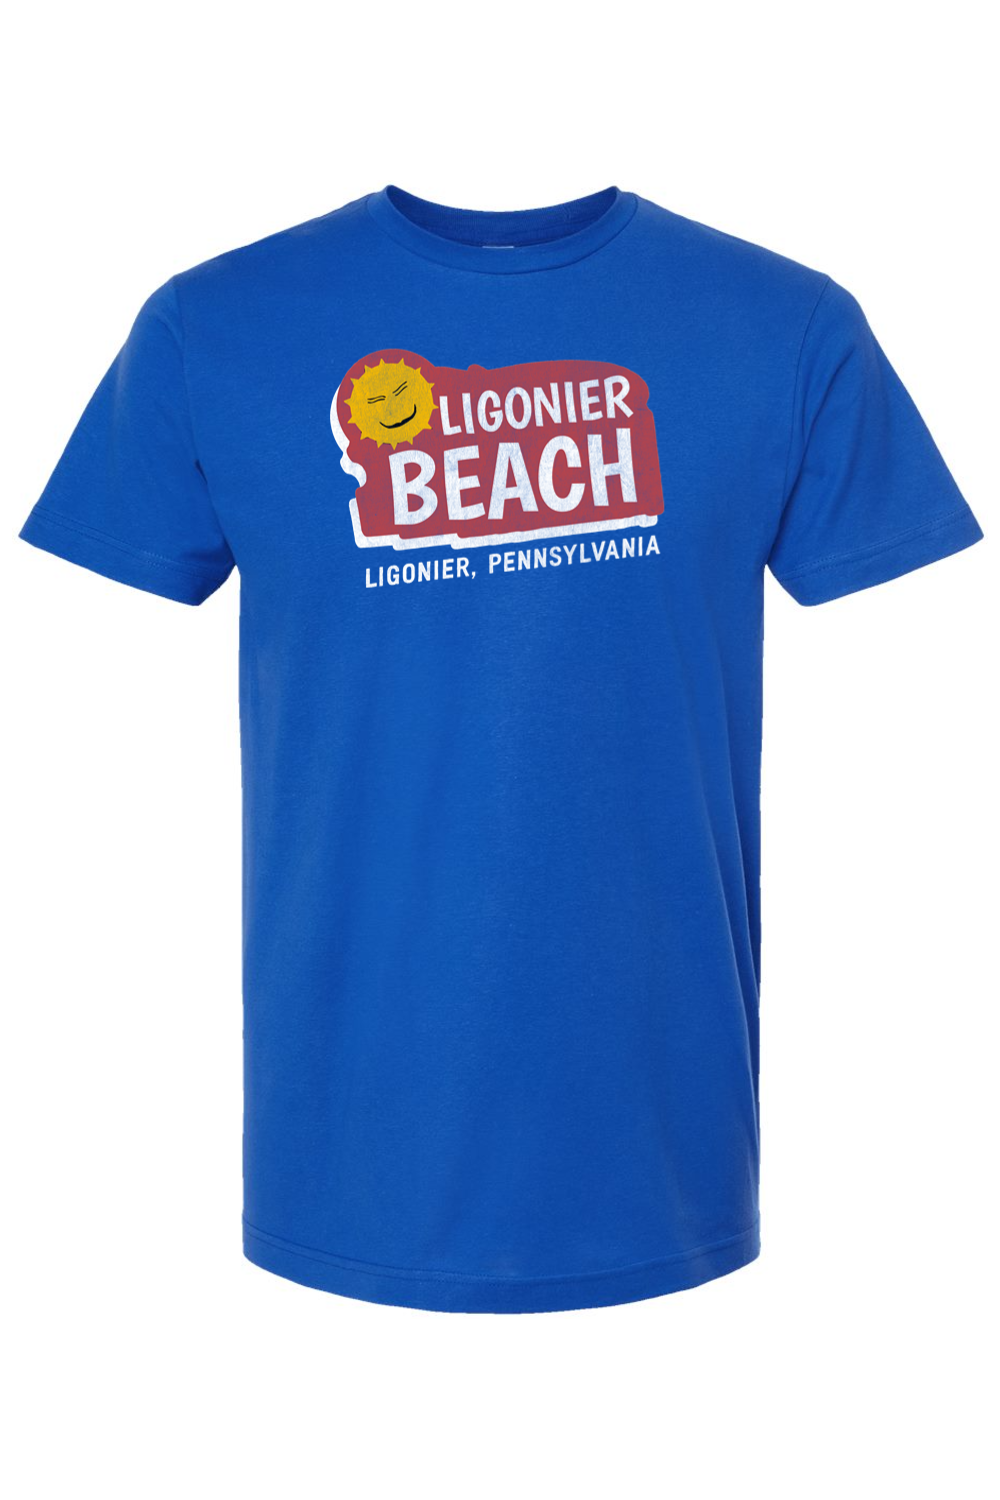 Ligonier Beach - Ligonier, PA